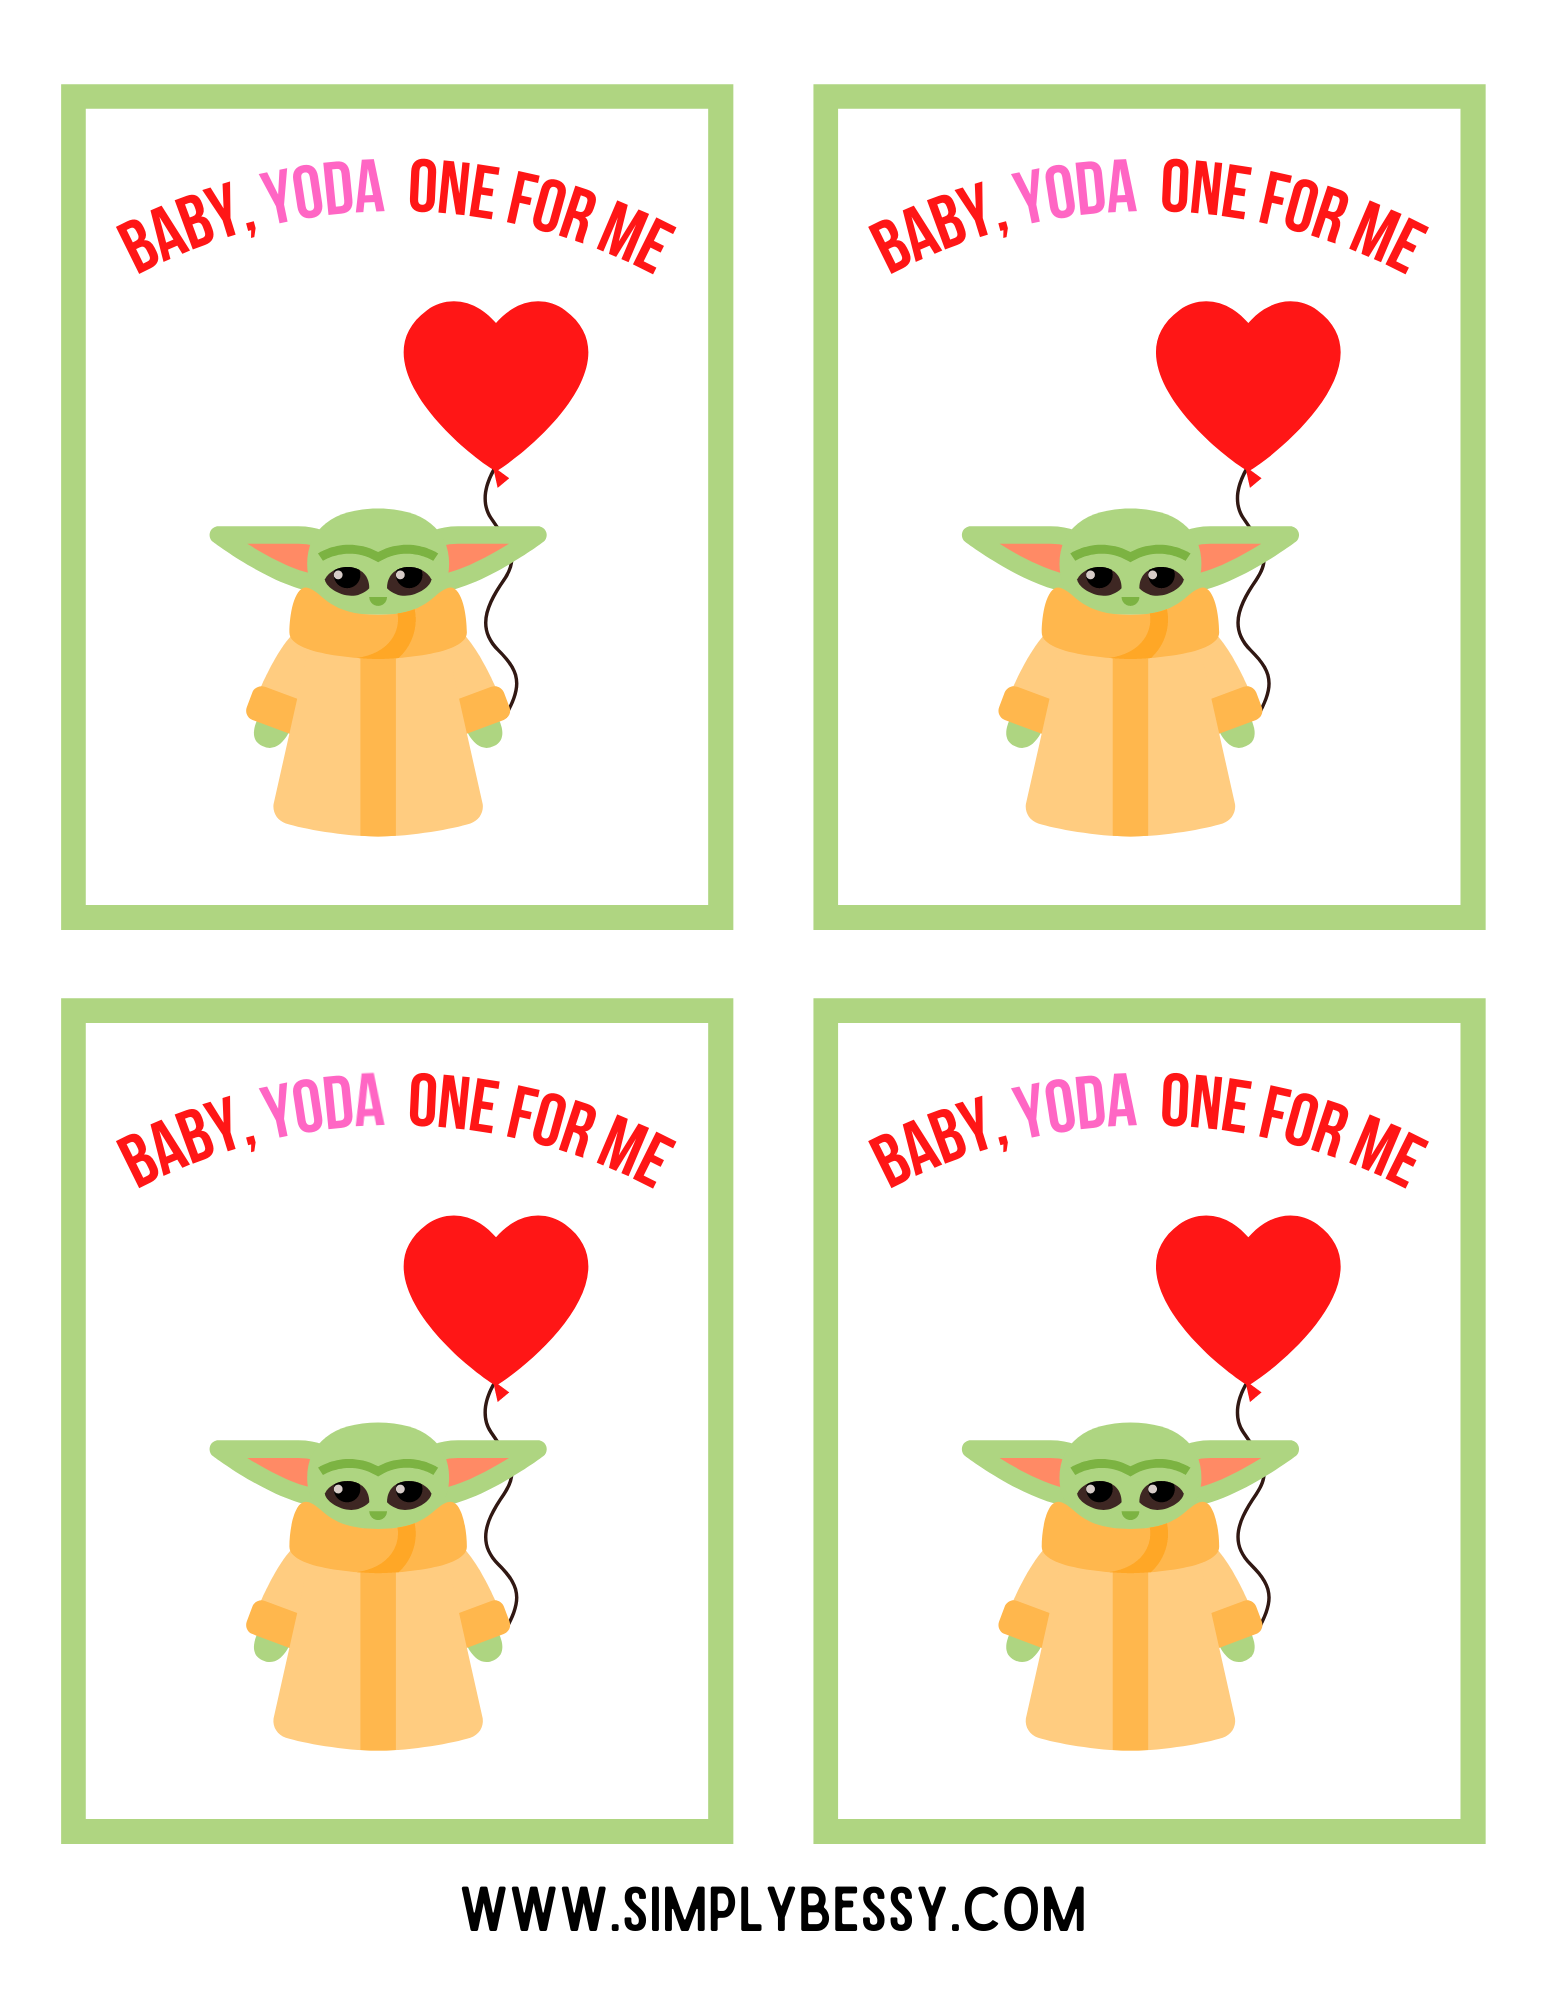 star-wars-baby-yoda-the-child-valentine-cards-free-printable